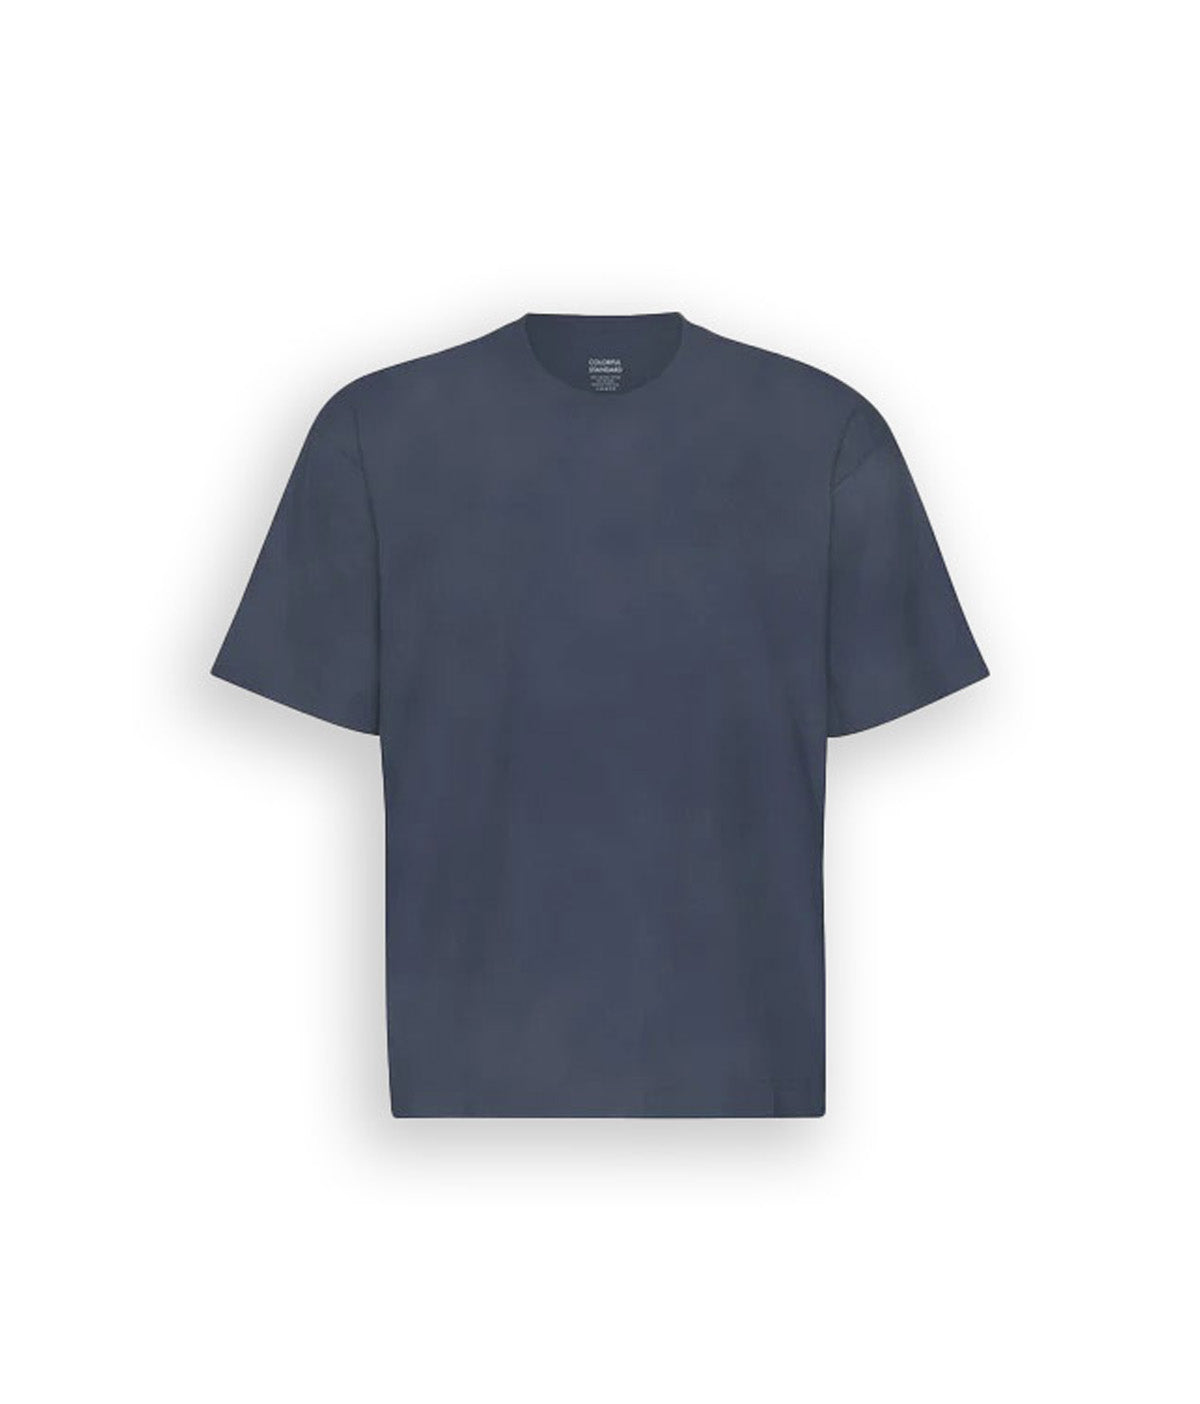 Oversized Colorful Standard T-Shirt Organic Cotton Blue Unisex